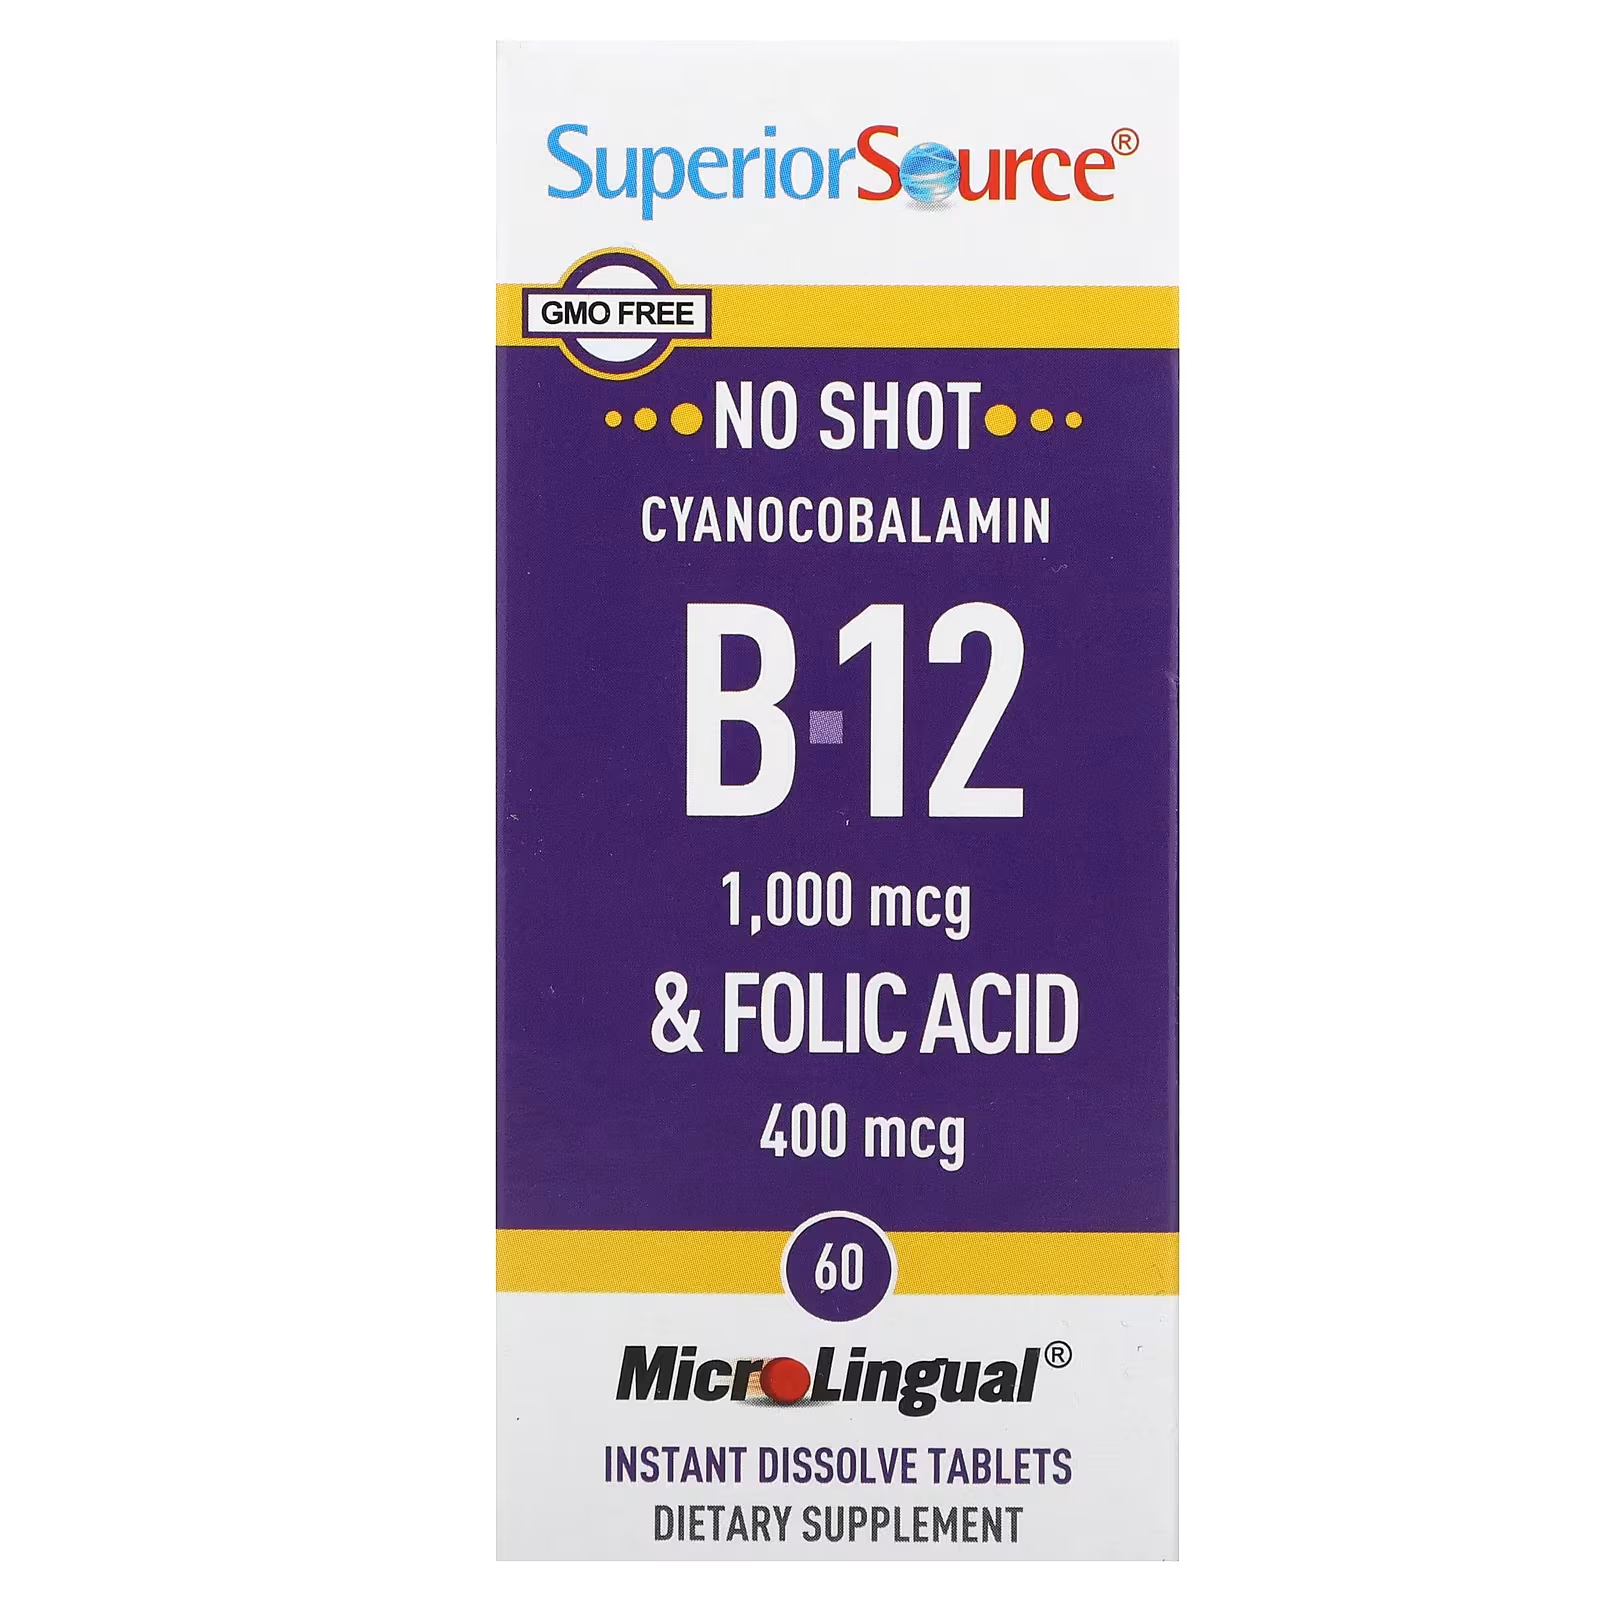 Цианокобаламин B-12 и фолиевая кислота MicroLingual Superior Source, 60 растворяющихся таблеток цианокобаламин b 12 superior source 1000 мкг 100 таблеток